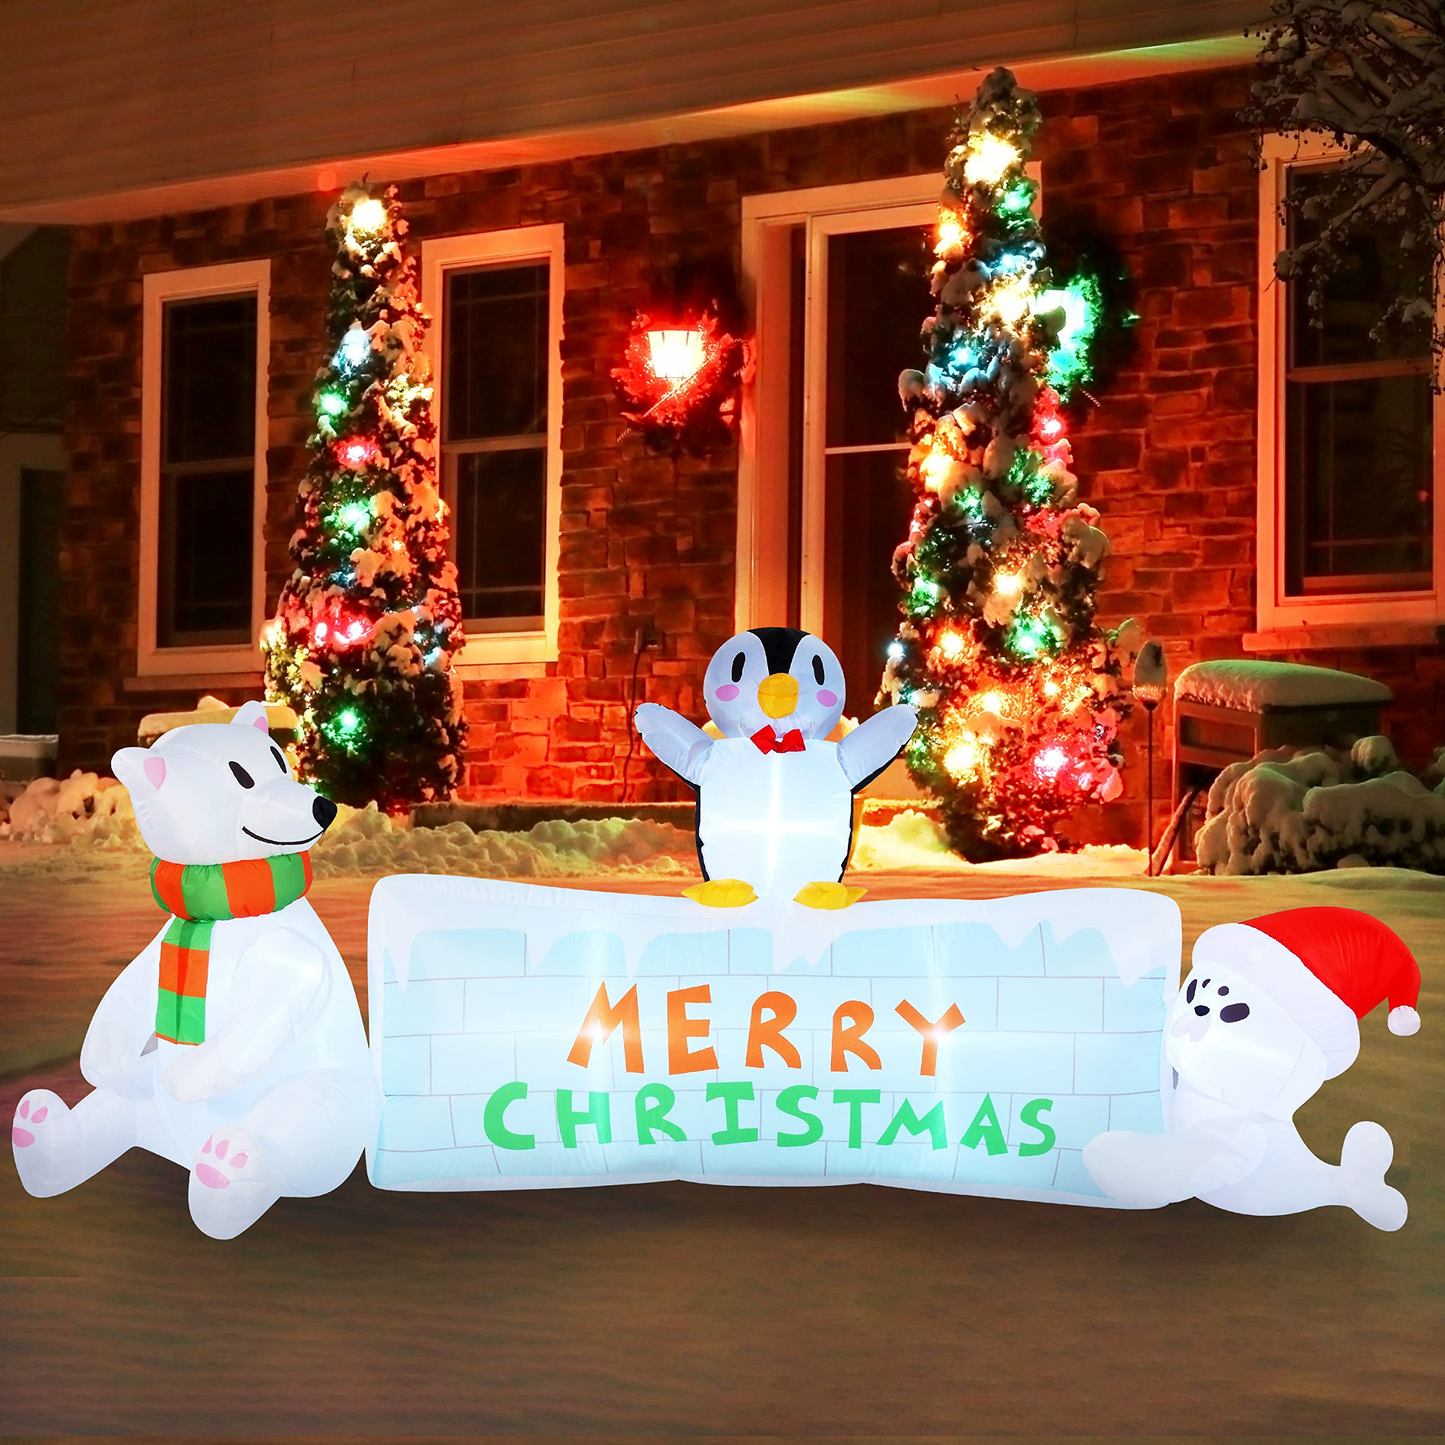 8ft Ice Bricks Banner Christmas Inflatable